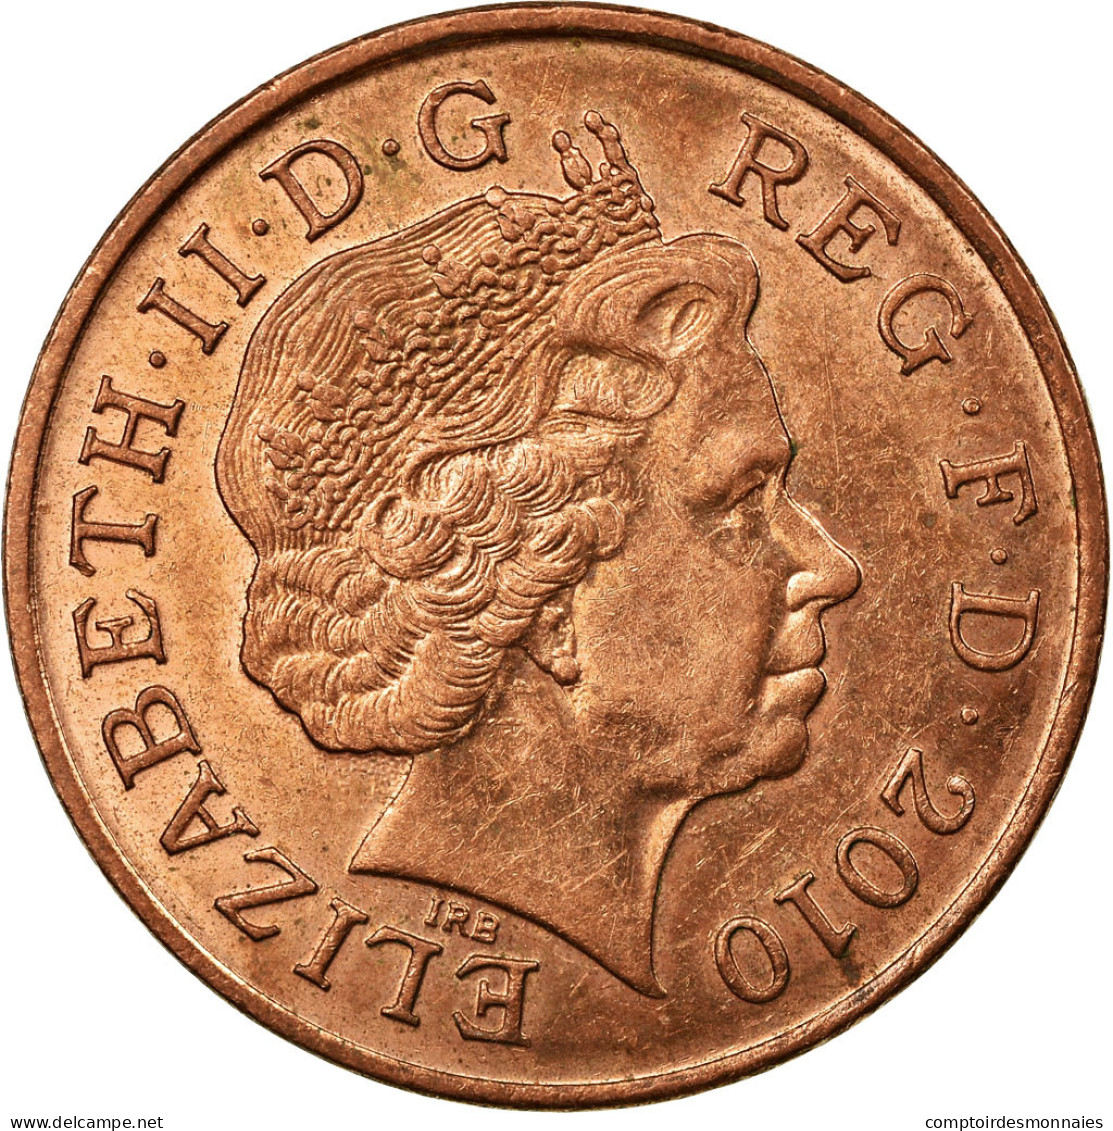 Monnaie, Grande-Bretagne, Elizabeth II, 2 Pence, 2010, TTB, Copper Plated Steel - 2 Pence & 2 New Pence